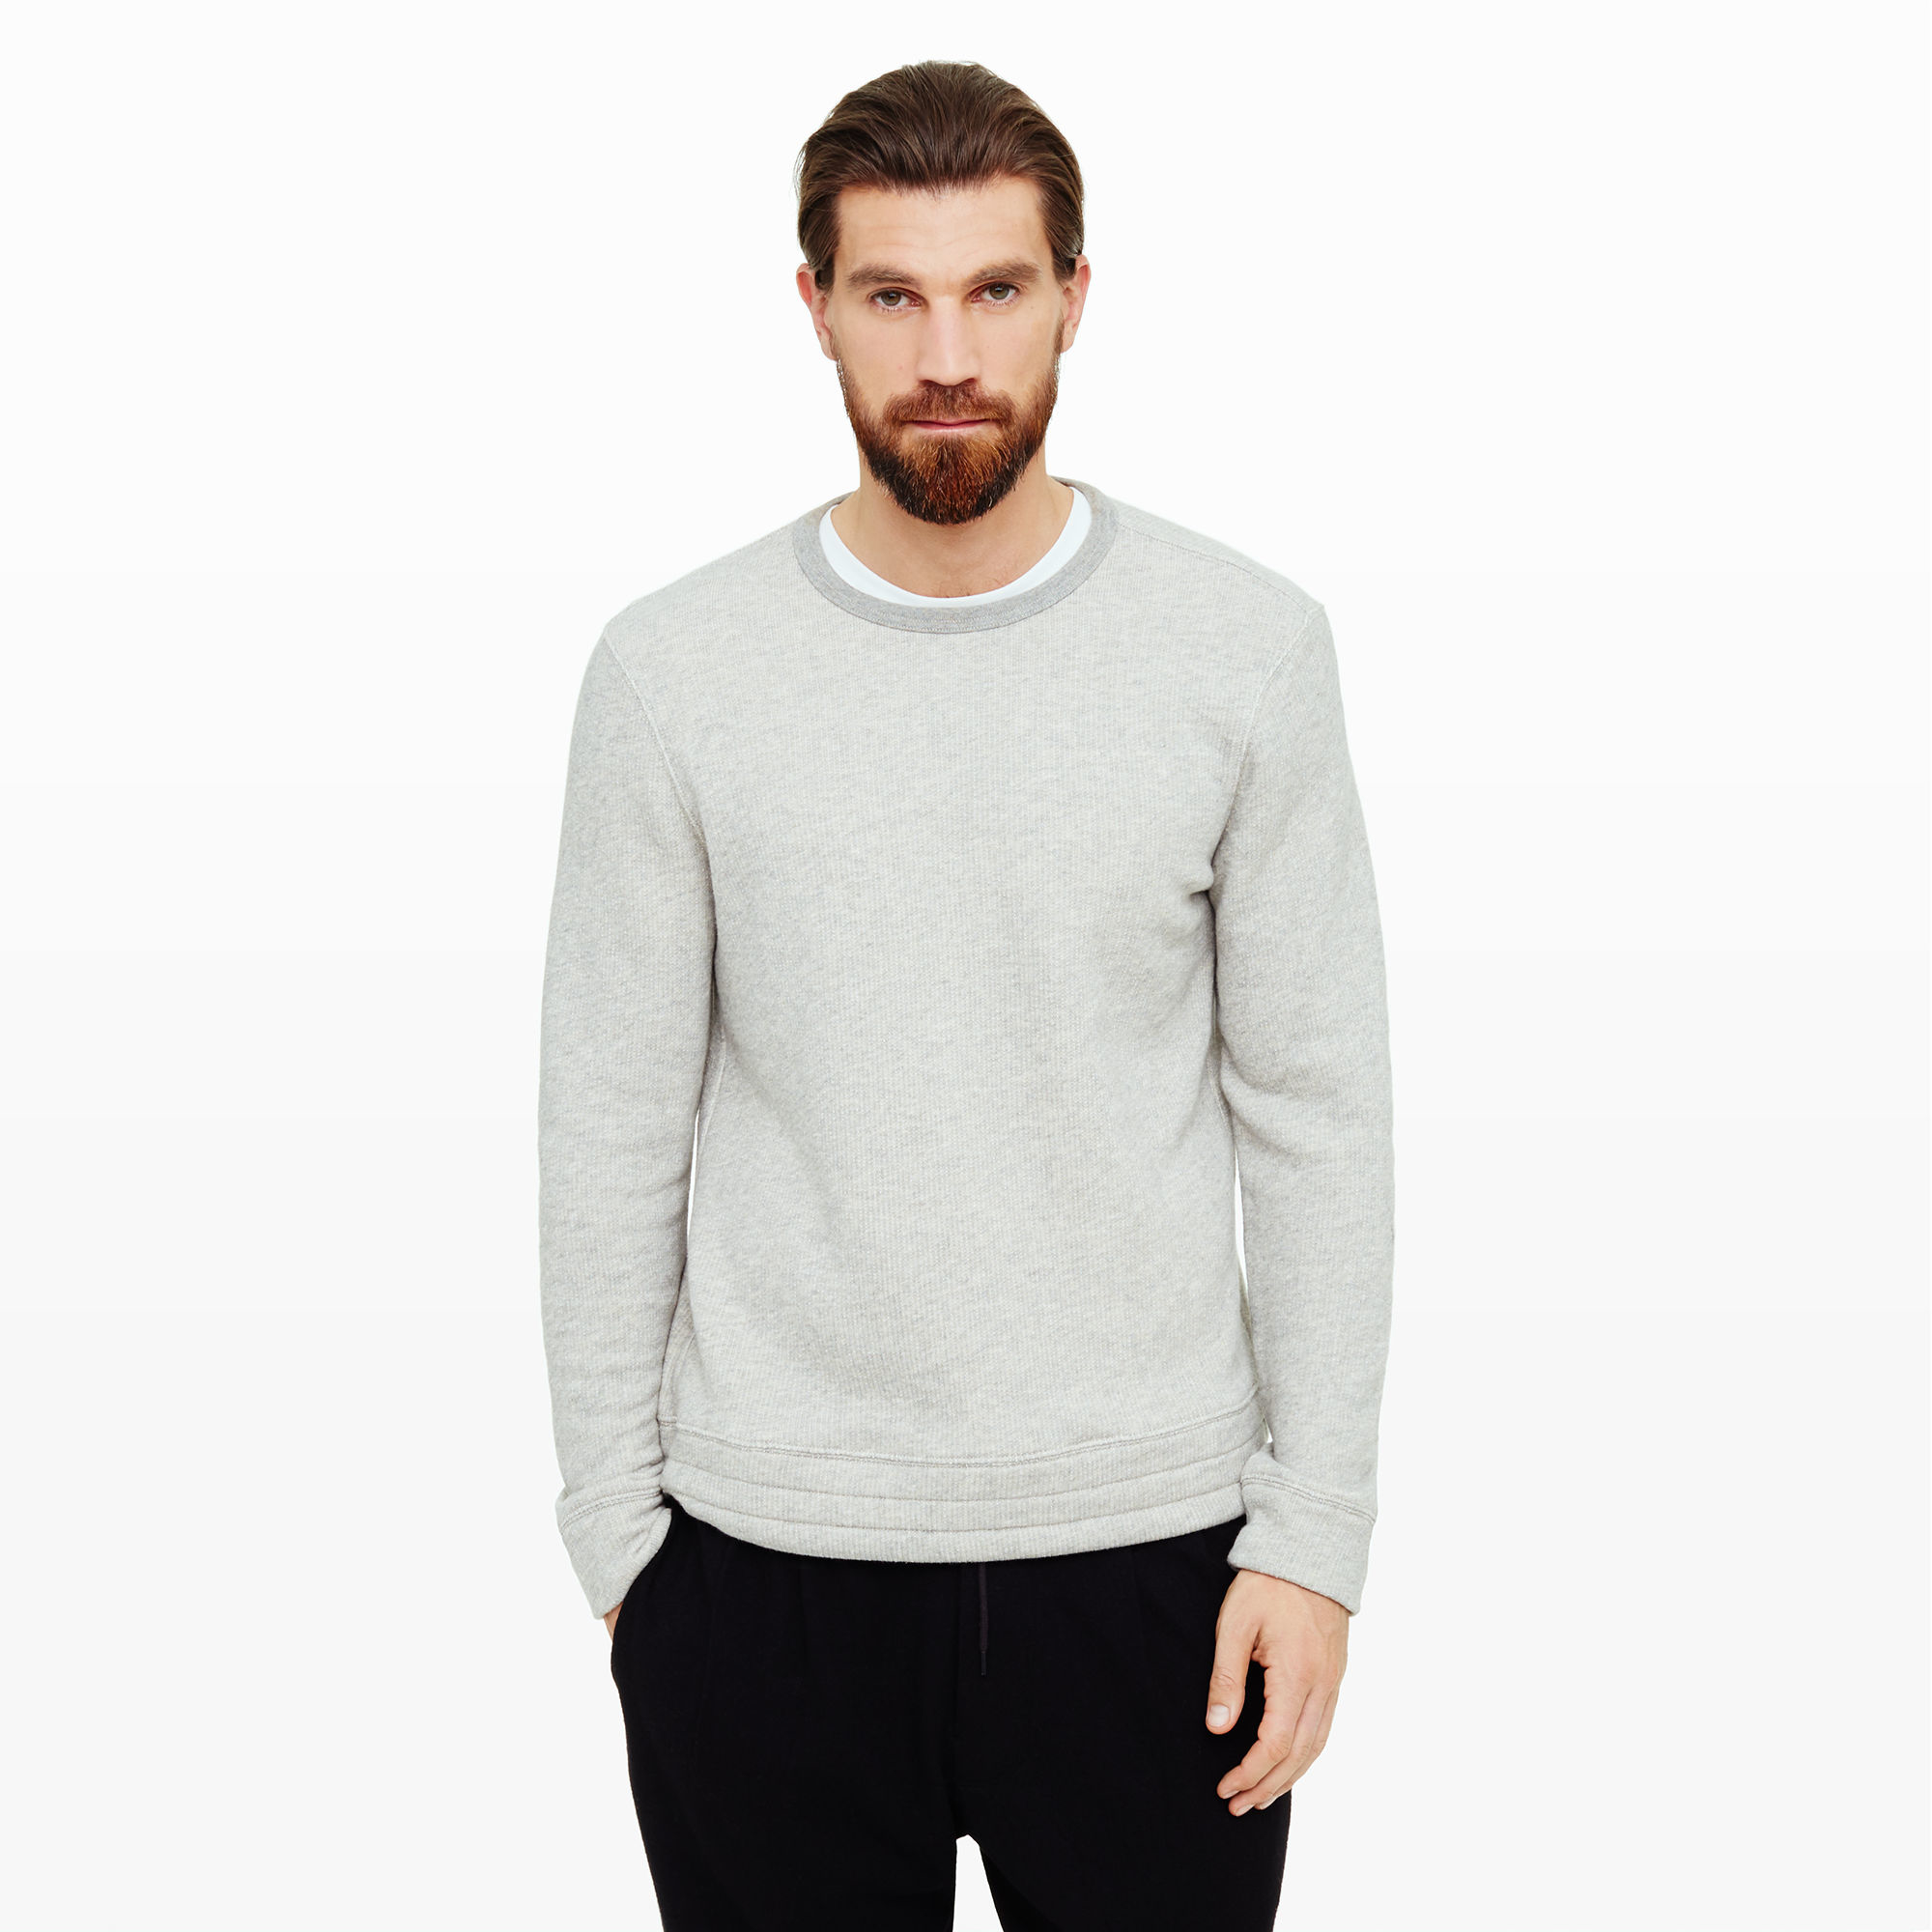 Lyst - Club Monaco Bungee Sweatshirt in Gray for Men